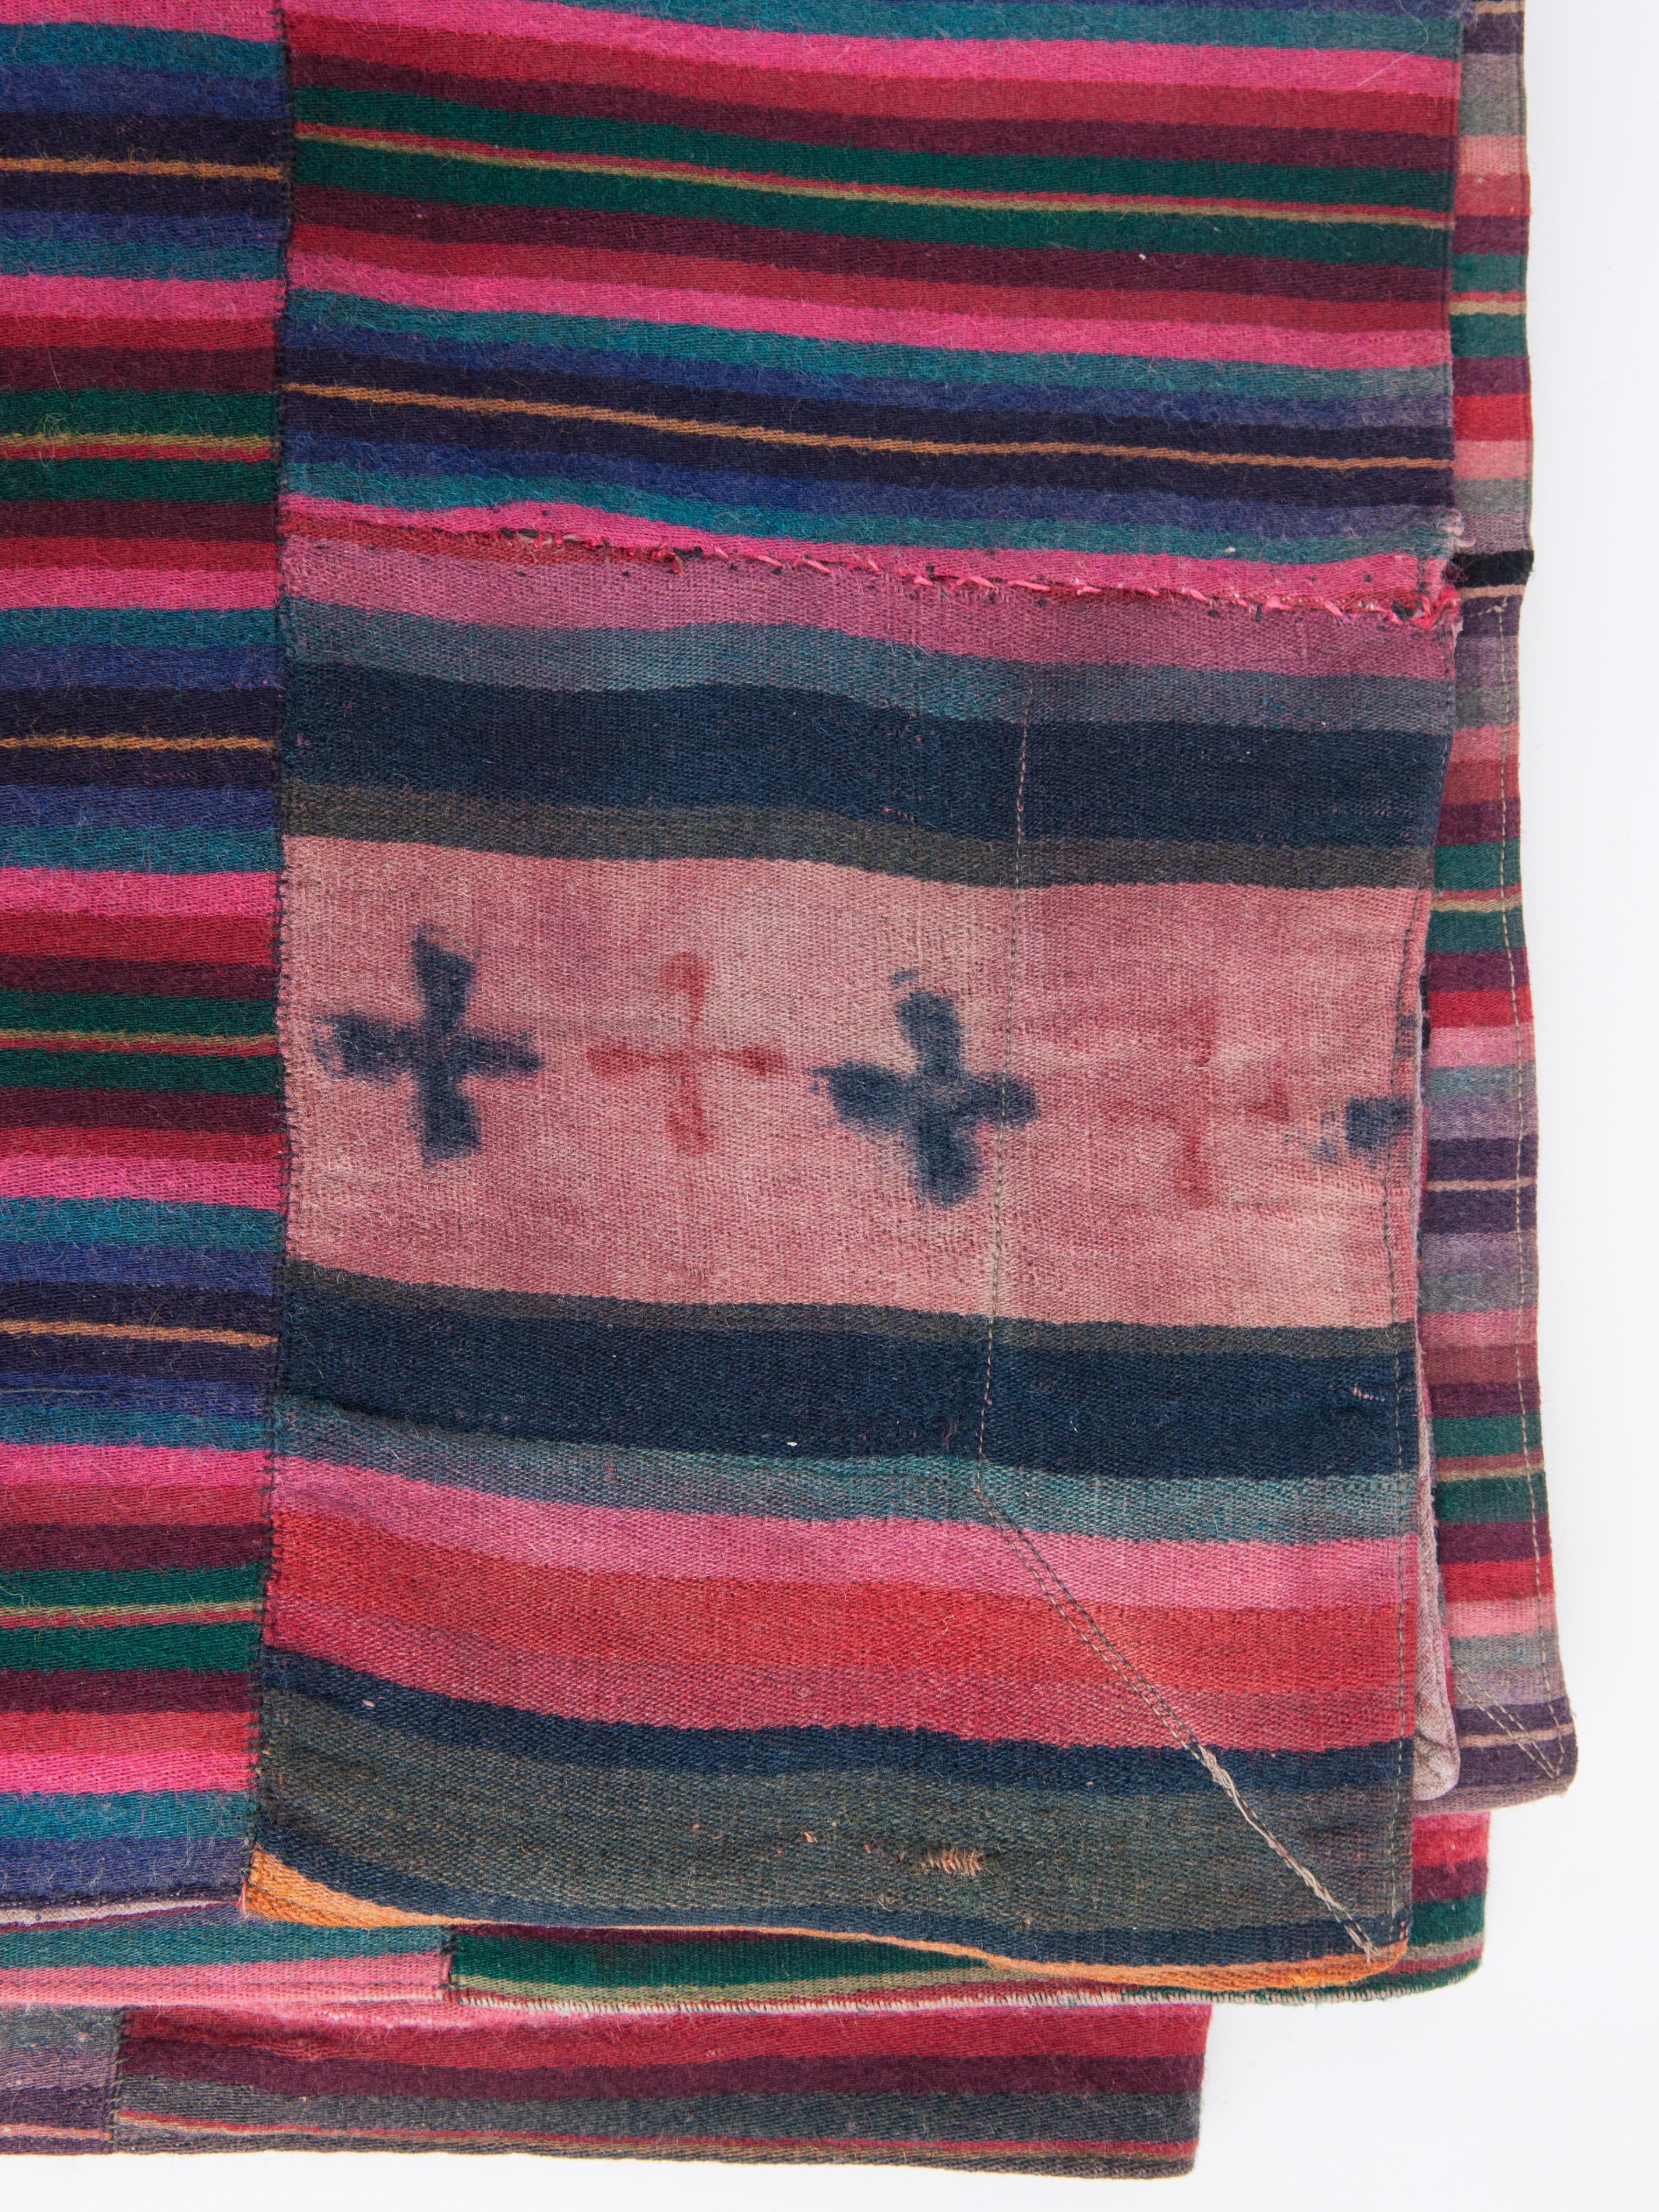 Bhutanese Vintage Tibetan Style Blanket from Bhutan, Wool, Mid-20th Century